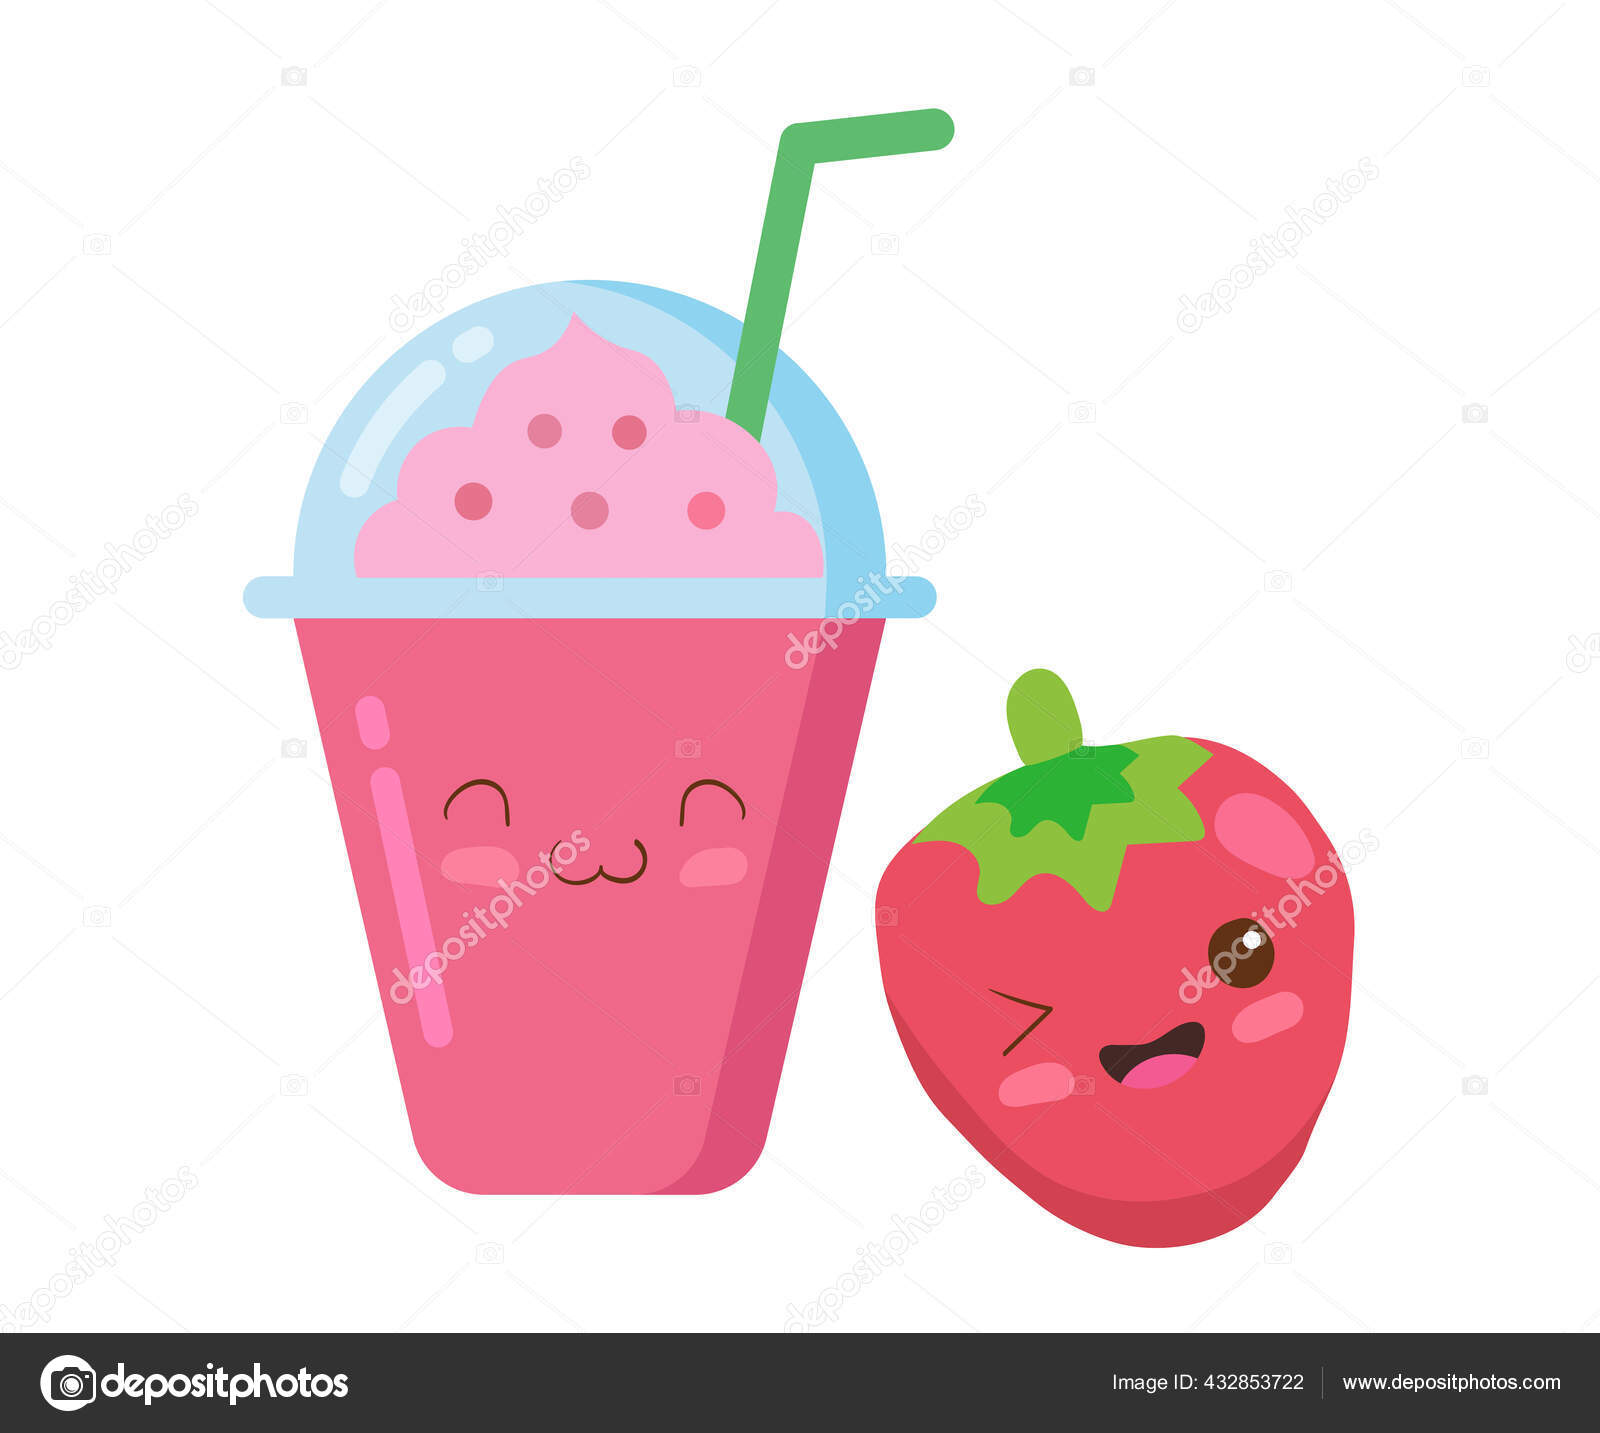 https://st2.depositphotos.com/39638942/43285/v/1600/depositphotos_432853722-stock-illustration-iced-fruits-smoothie-plastic-cup.jpg